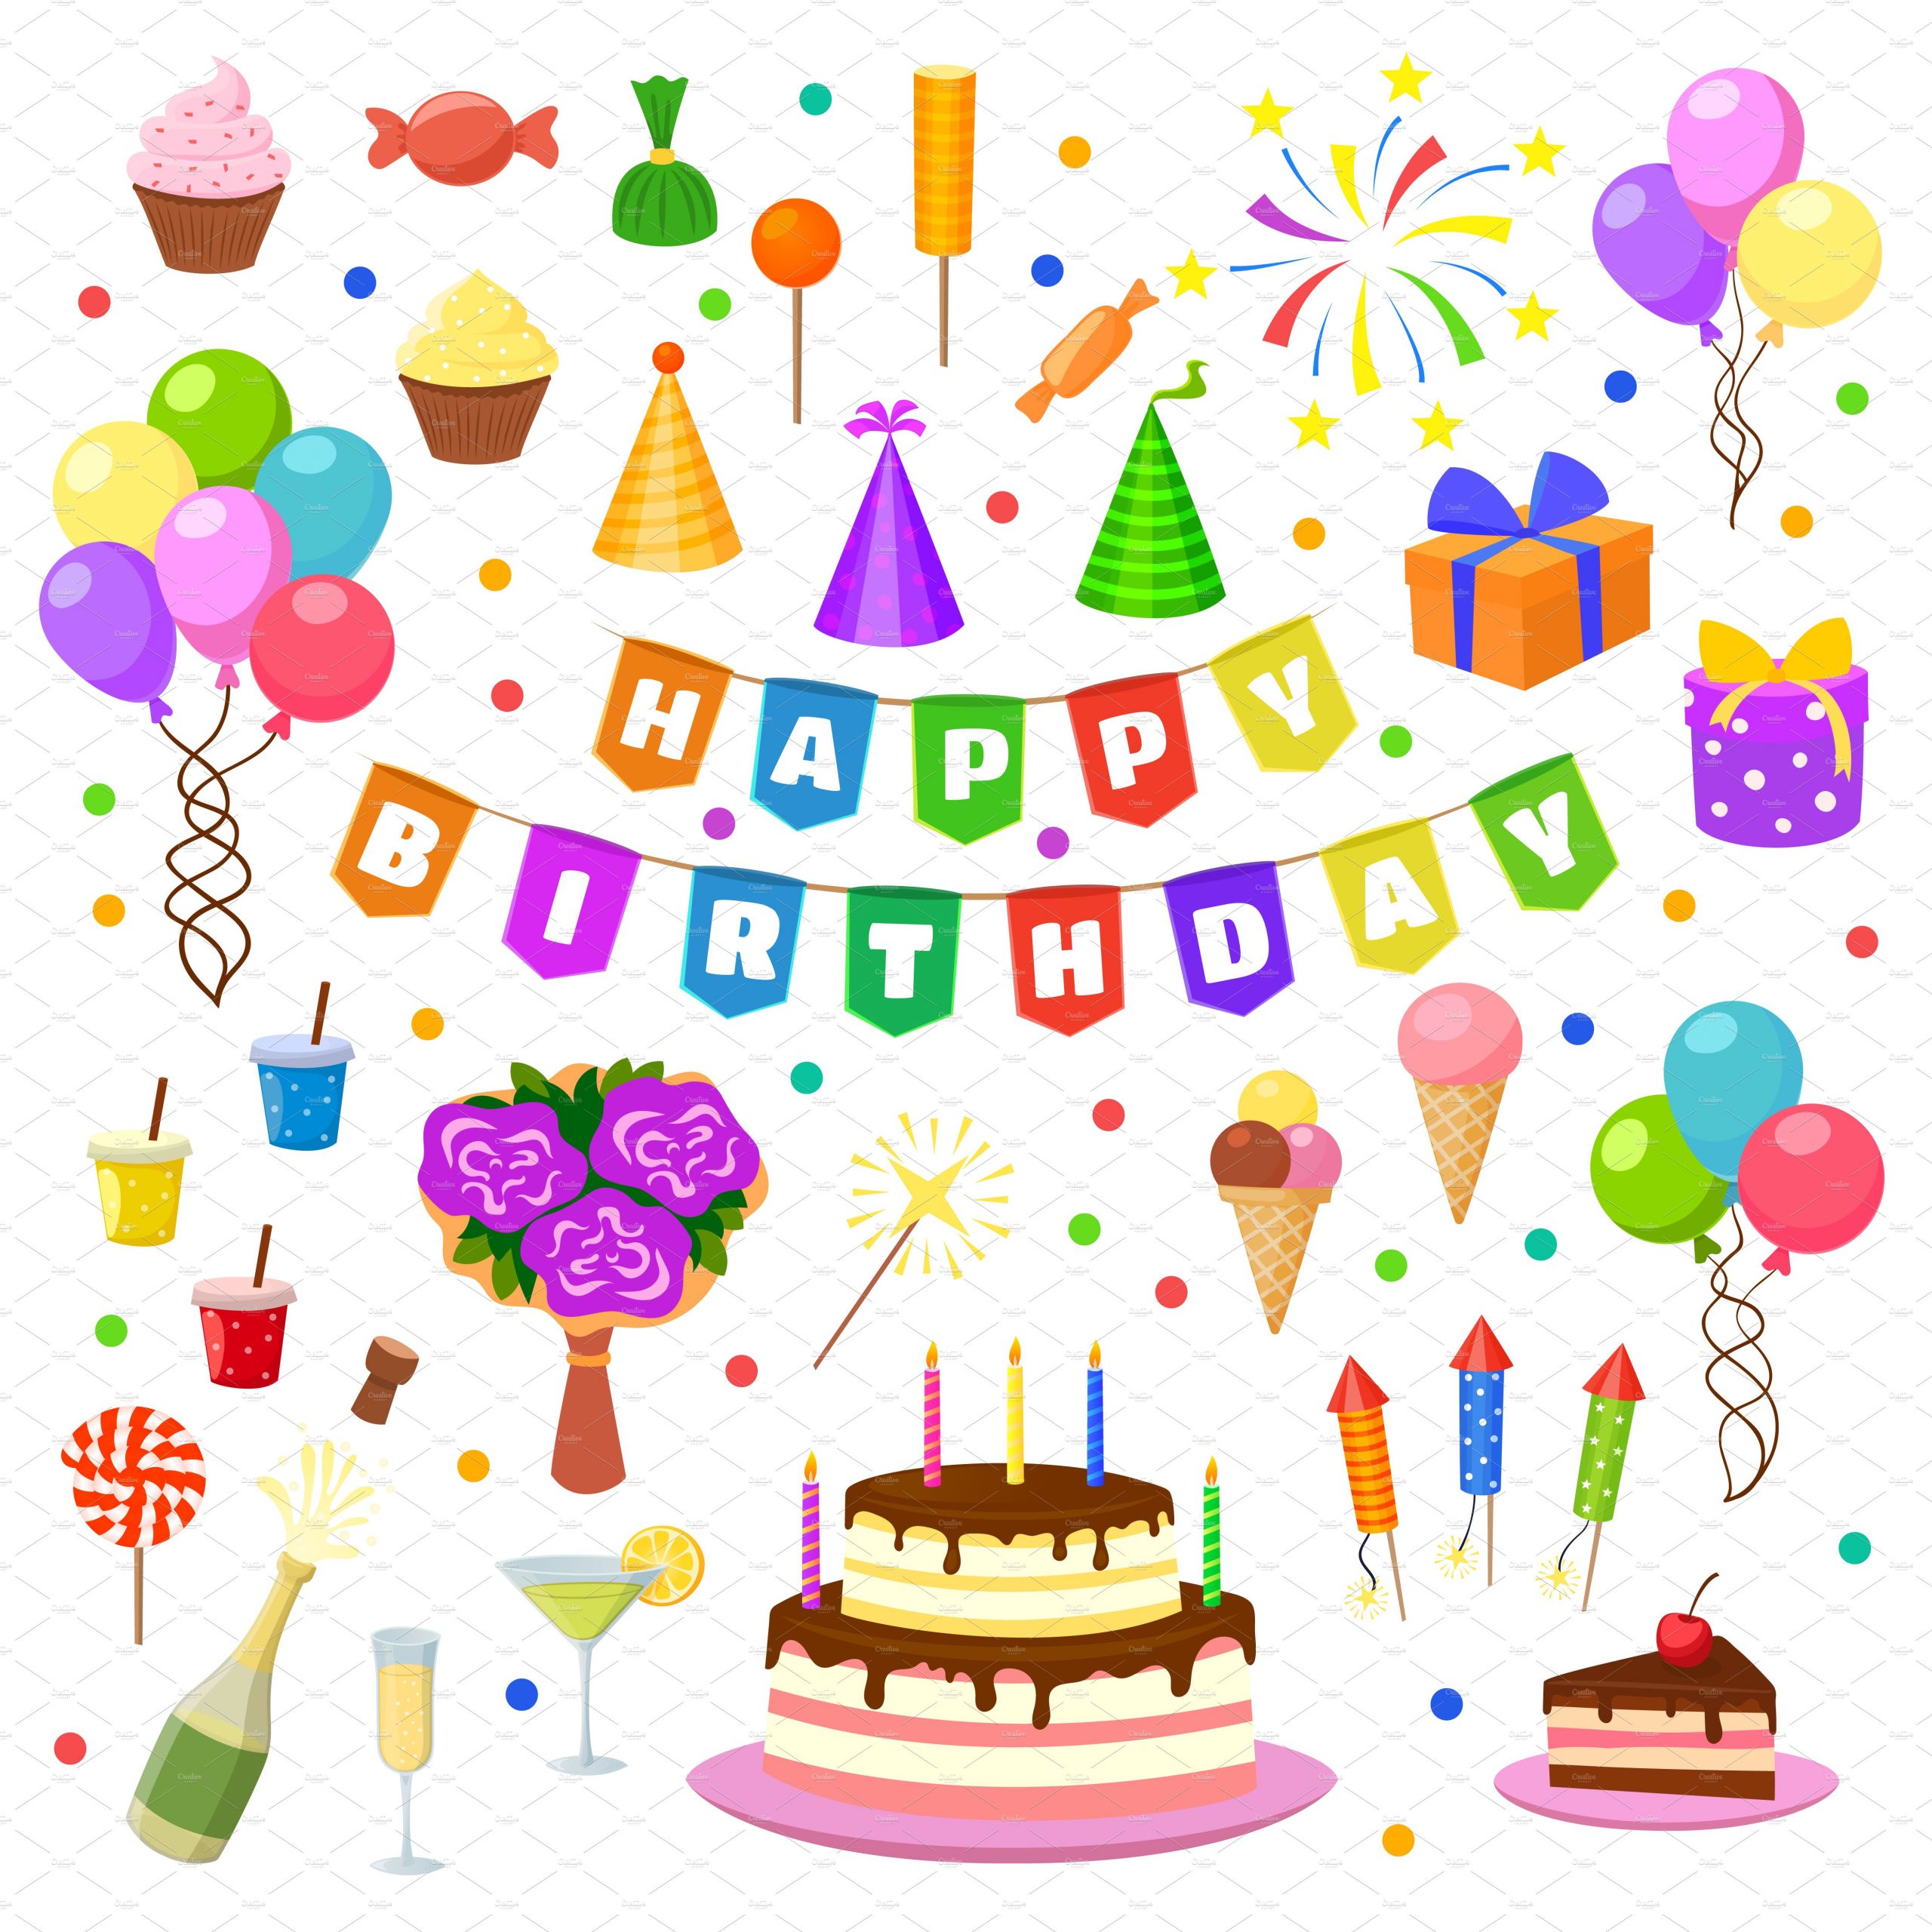 Happy Birthday Decorations
 Happy birthday party symbols vector Graphic Objects